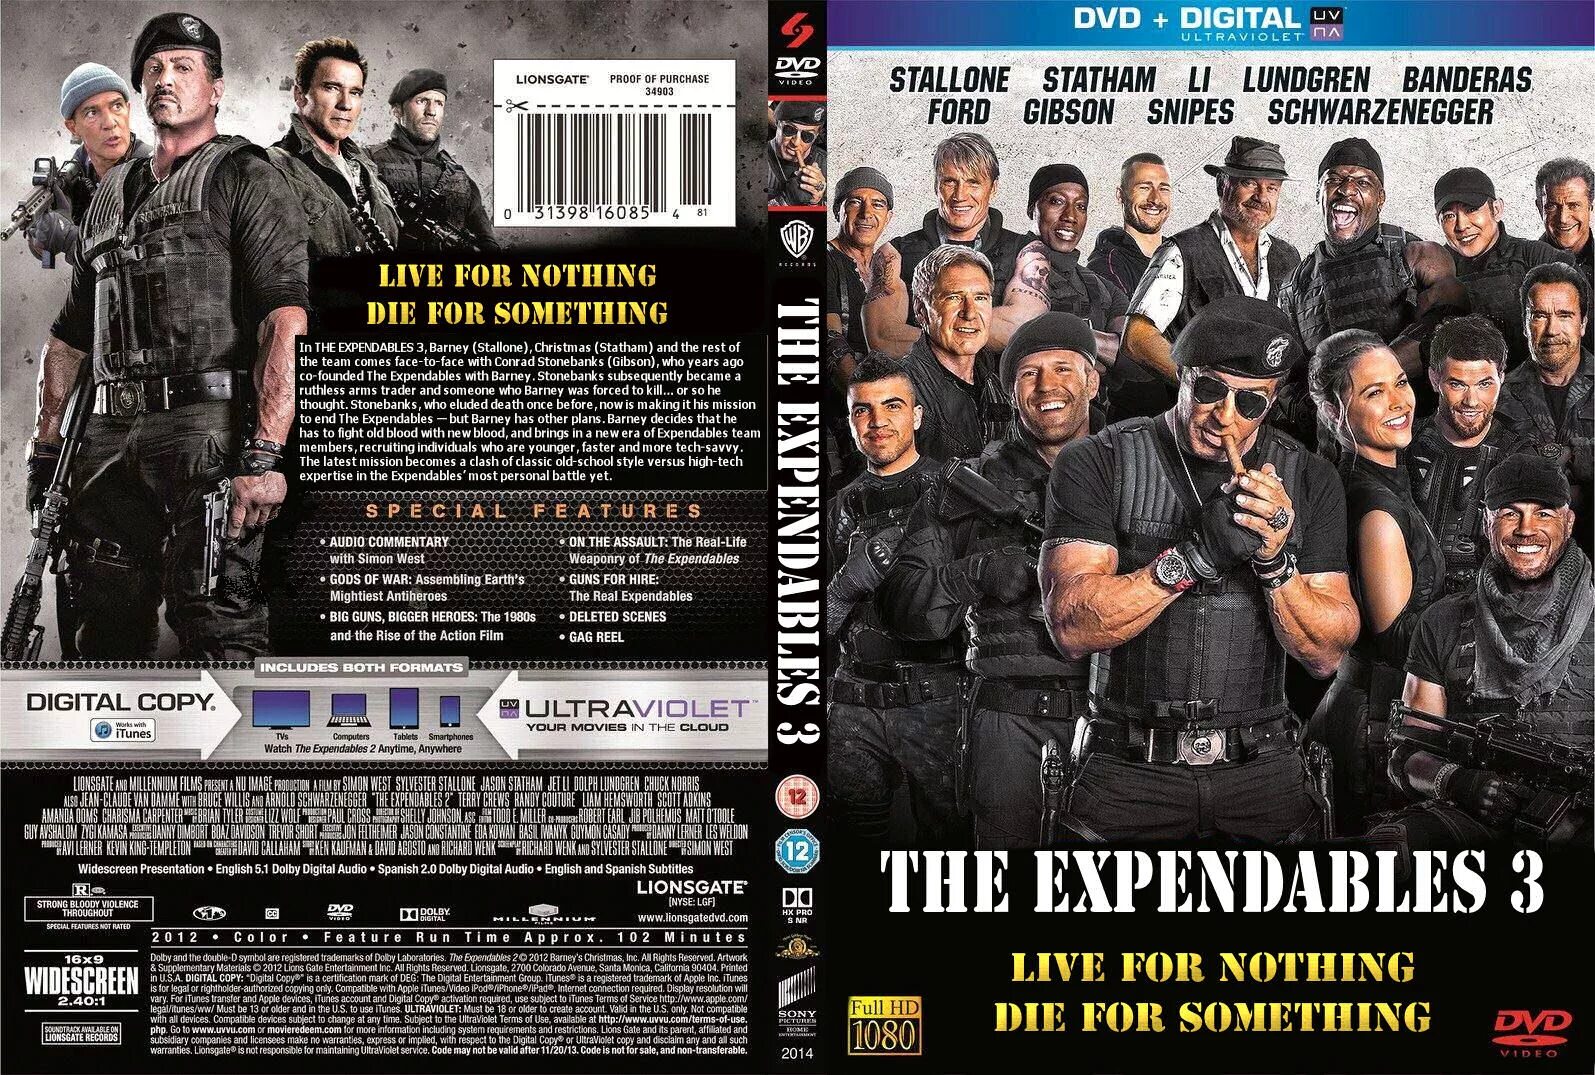 The Expendables 3 обложка DVD. The Expendables 3 DVD Cover. The Expendables постеры. The Expendables 3 2014. Читать книги андрея боярского неудержимый 7